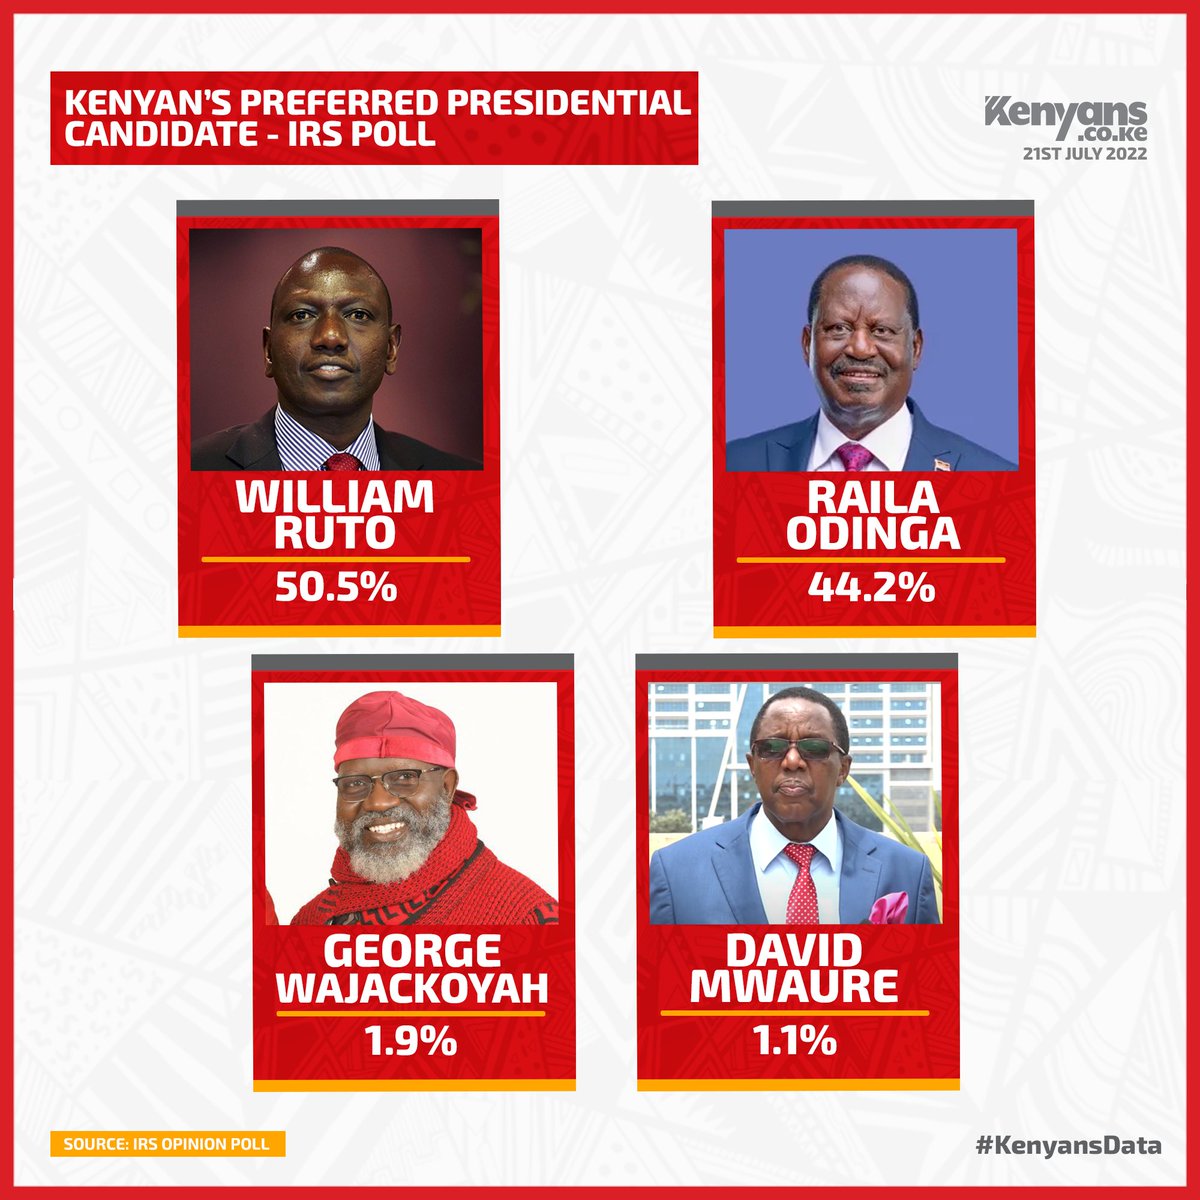 DP Ruto beats Raila in latest IRS opinion poll. #KenyansData